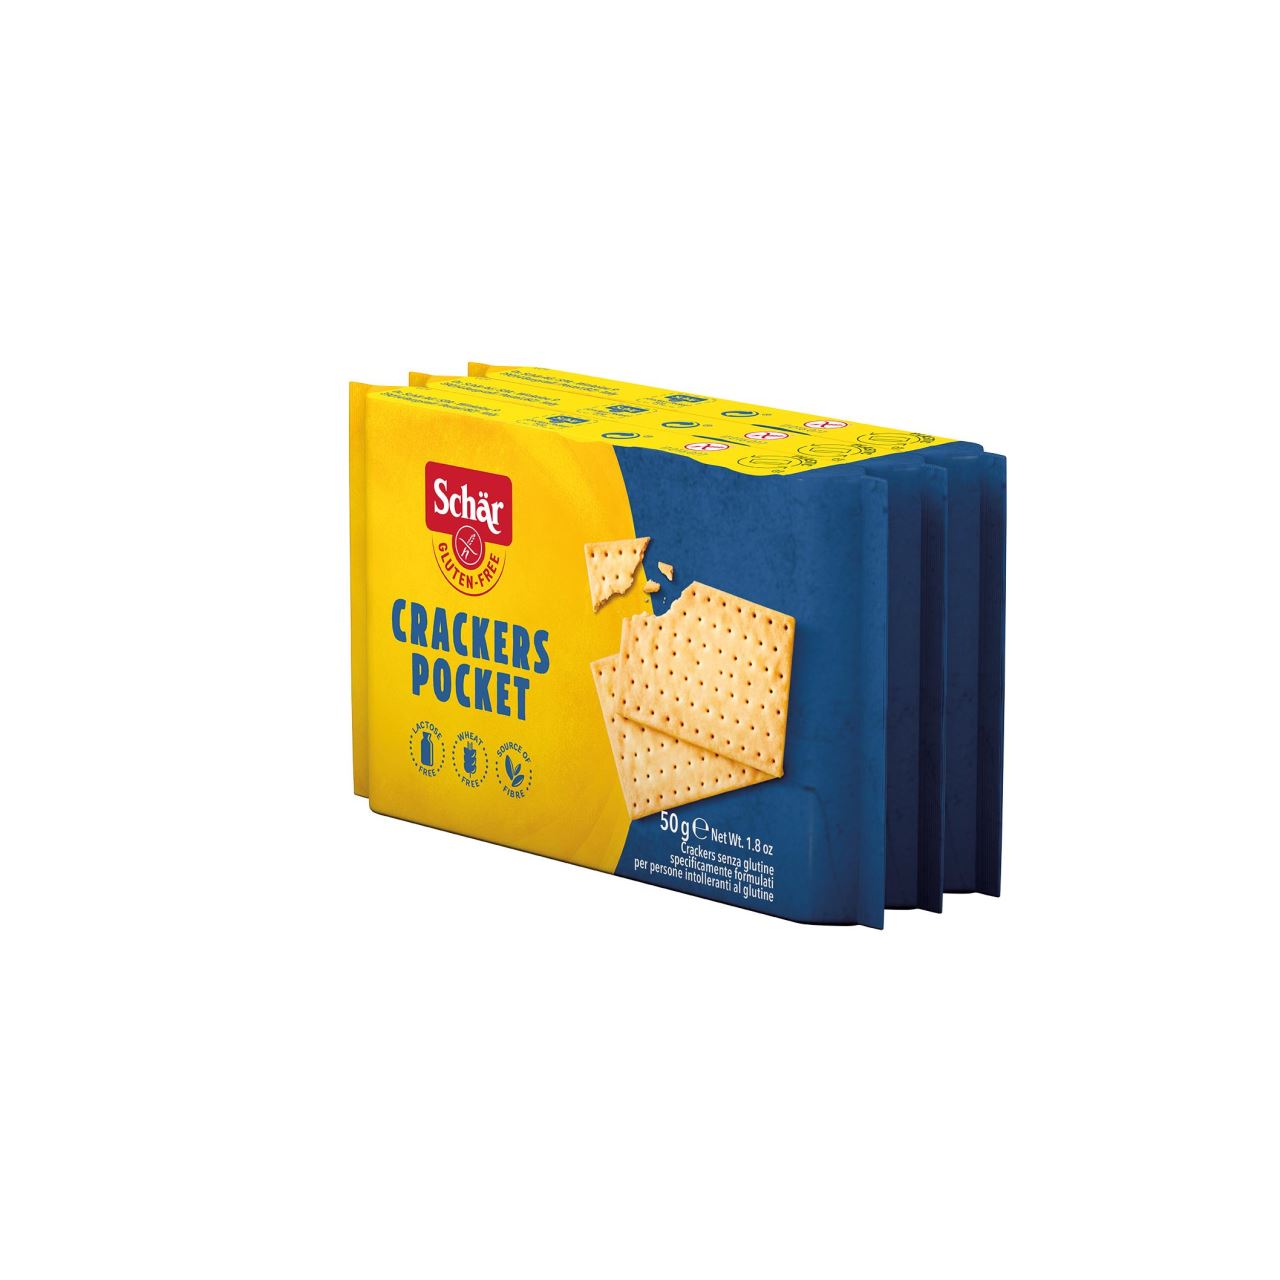 Crackers fara gluten Crackers Pocket 3x50gr Schar